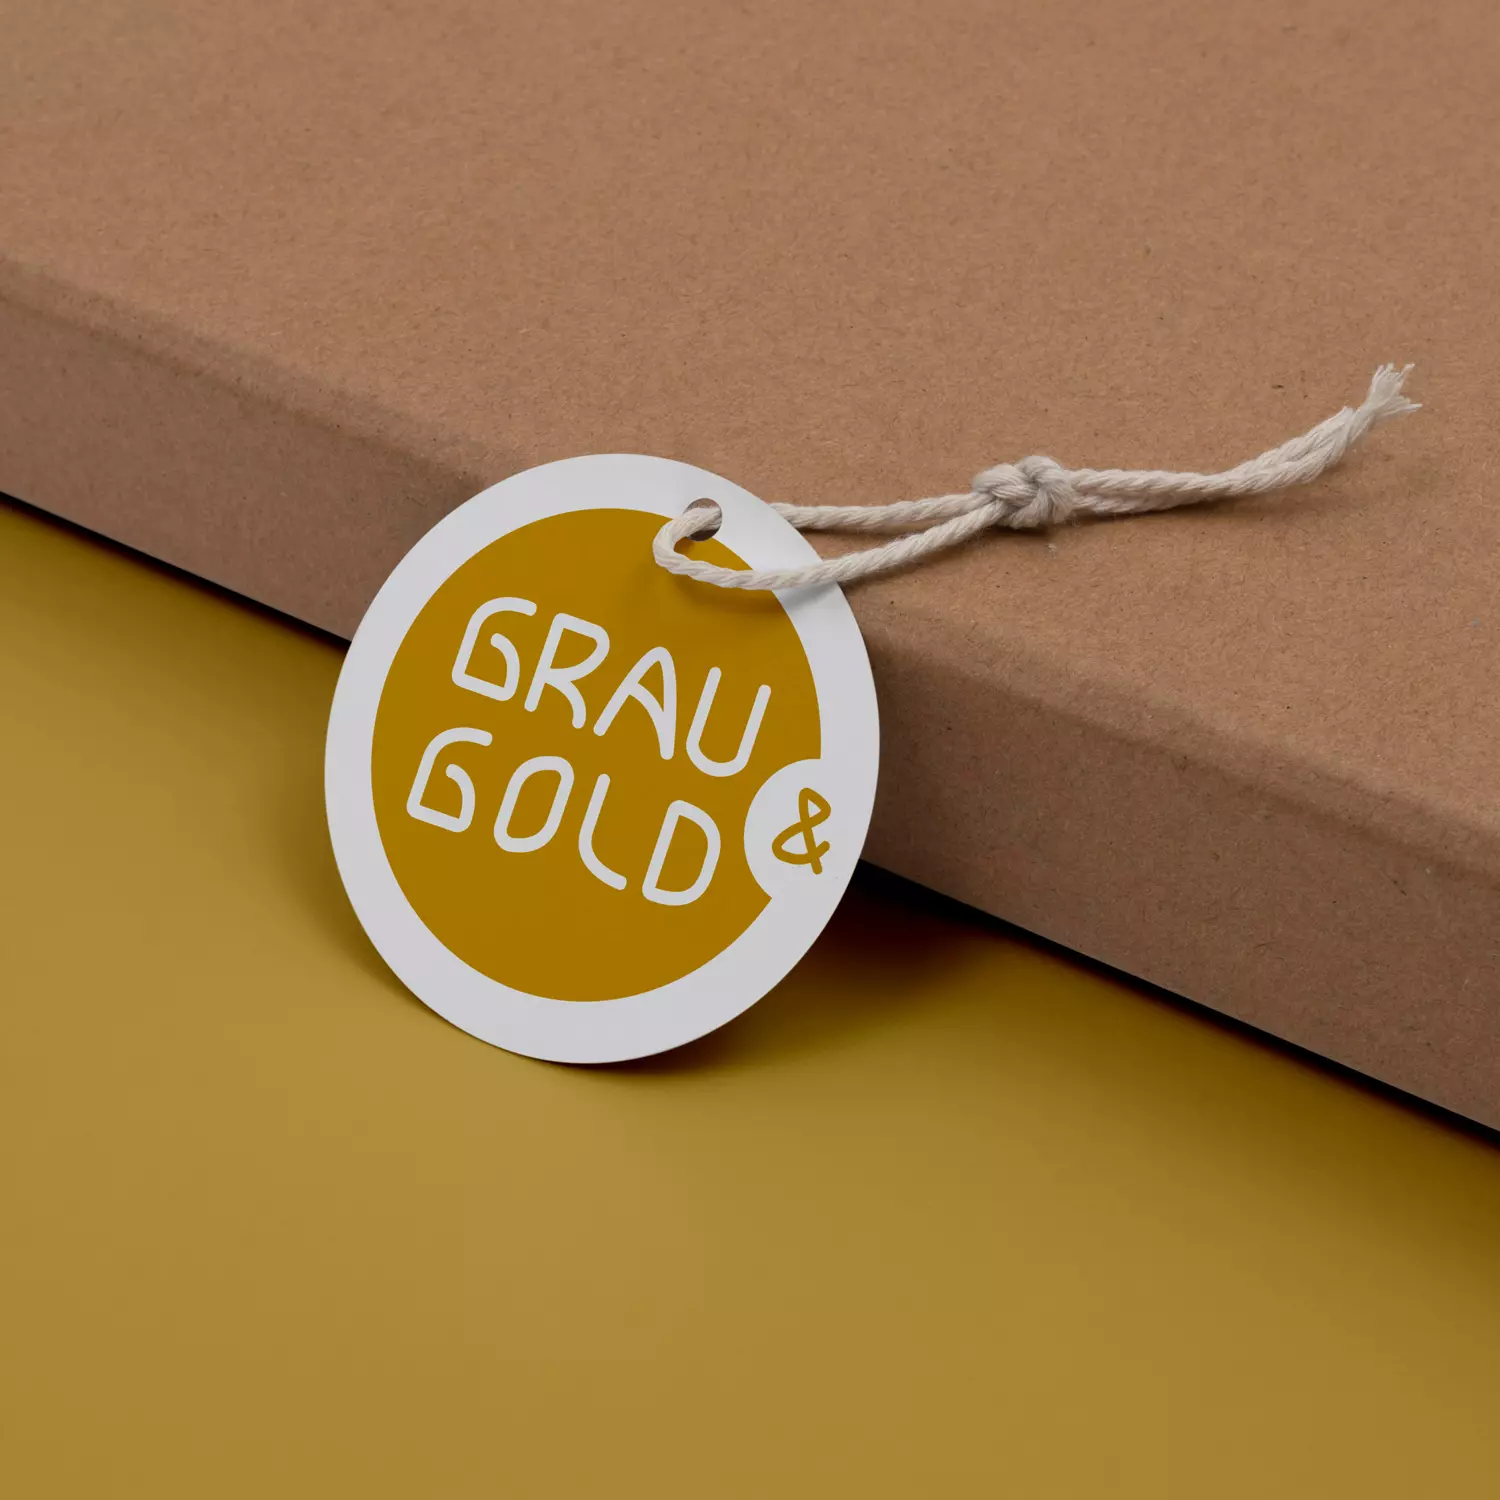 Branding: Grau & Gold